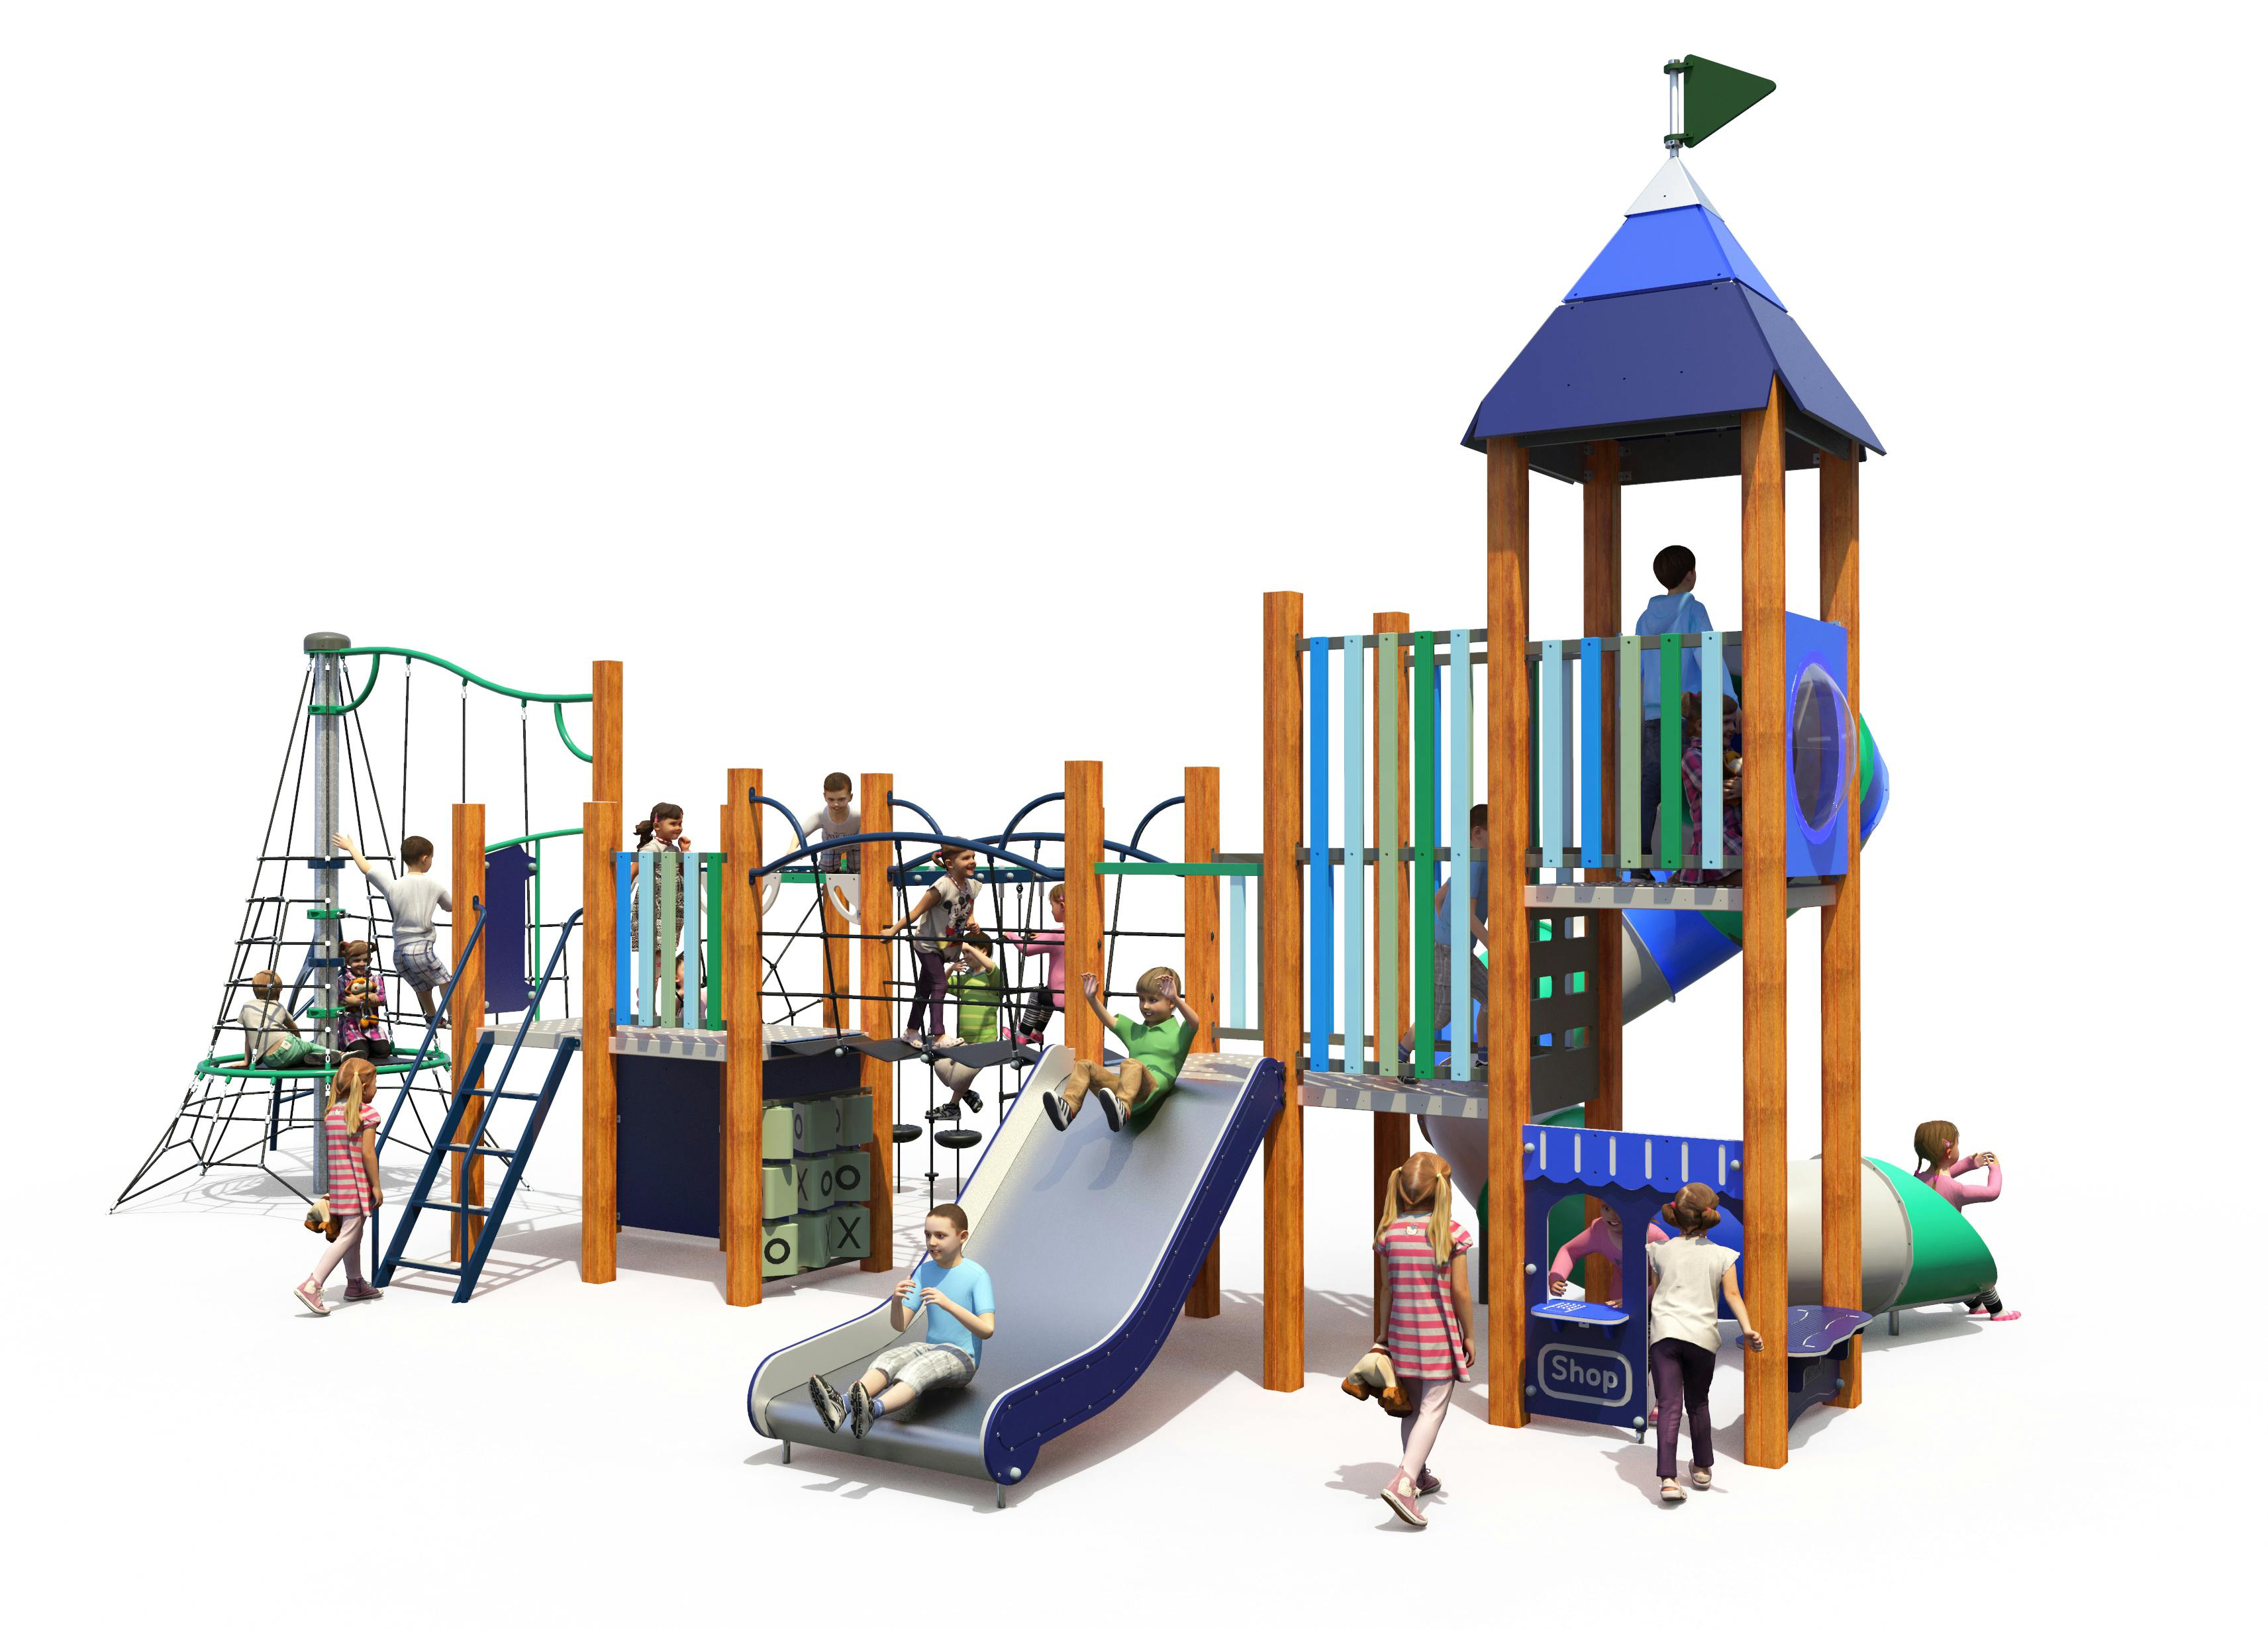 Playground image front